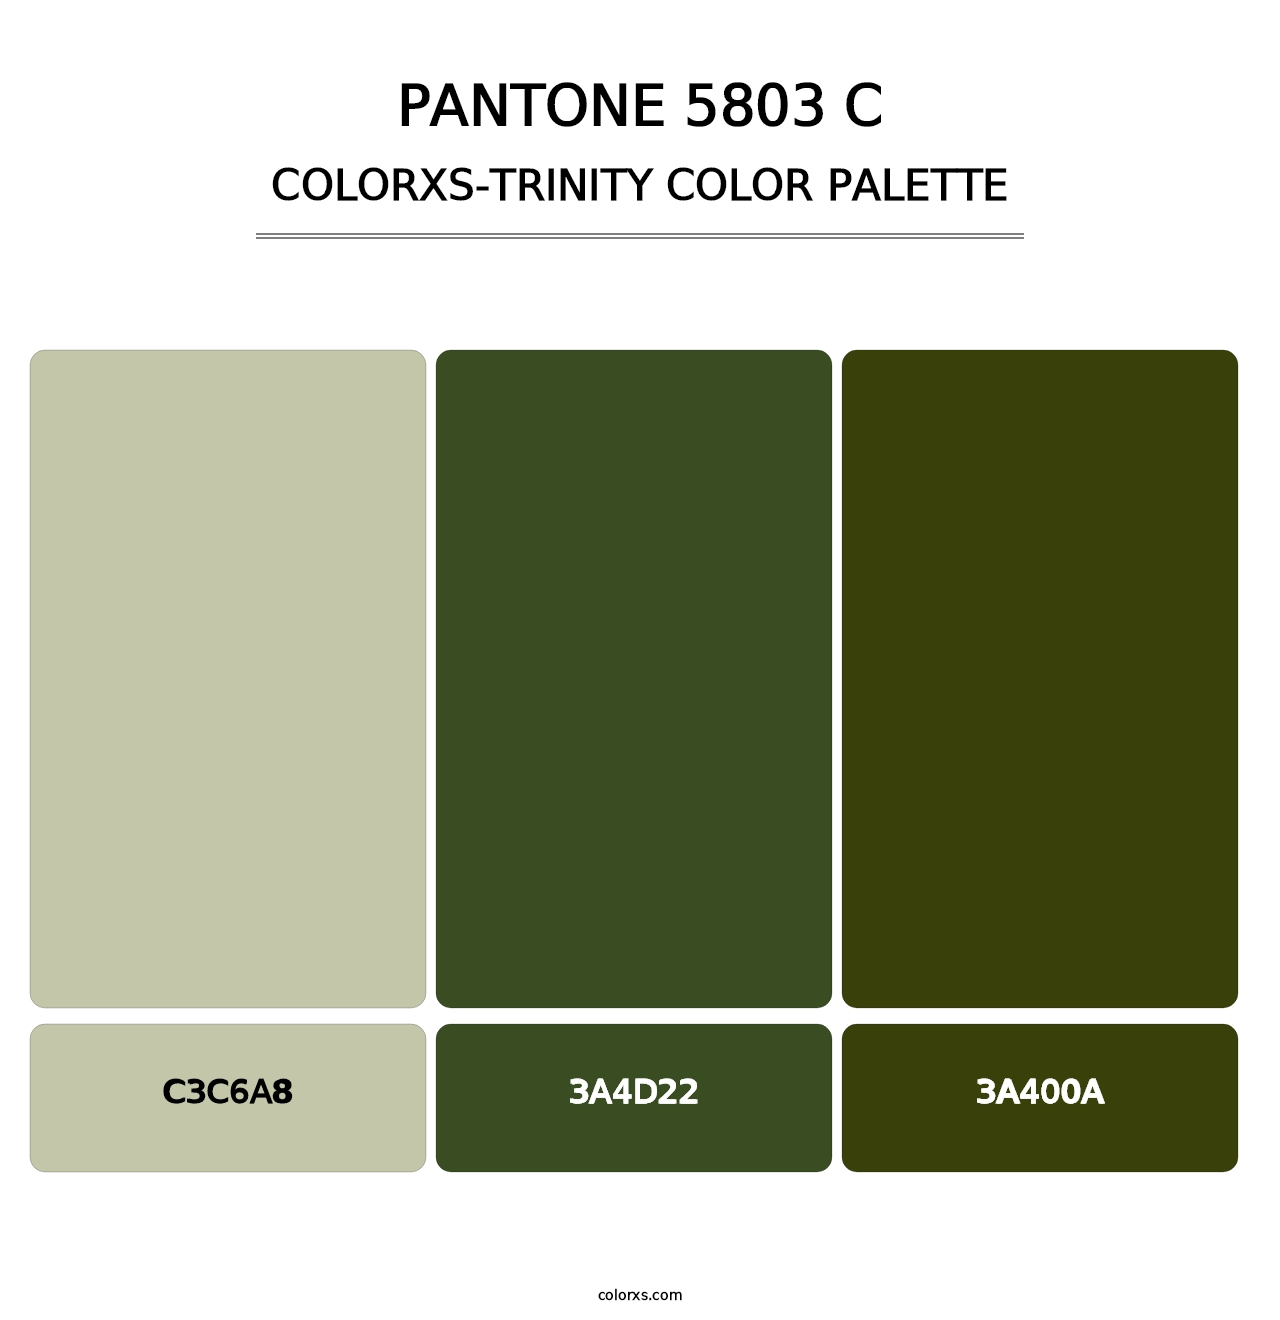 PANTONE 5803 C - Colorxs Trinity Palette